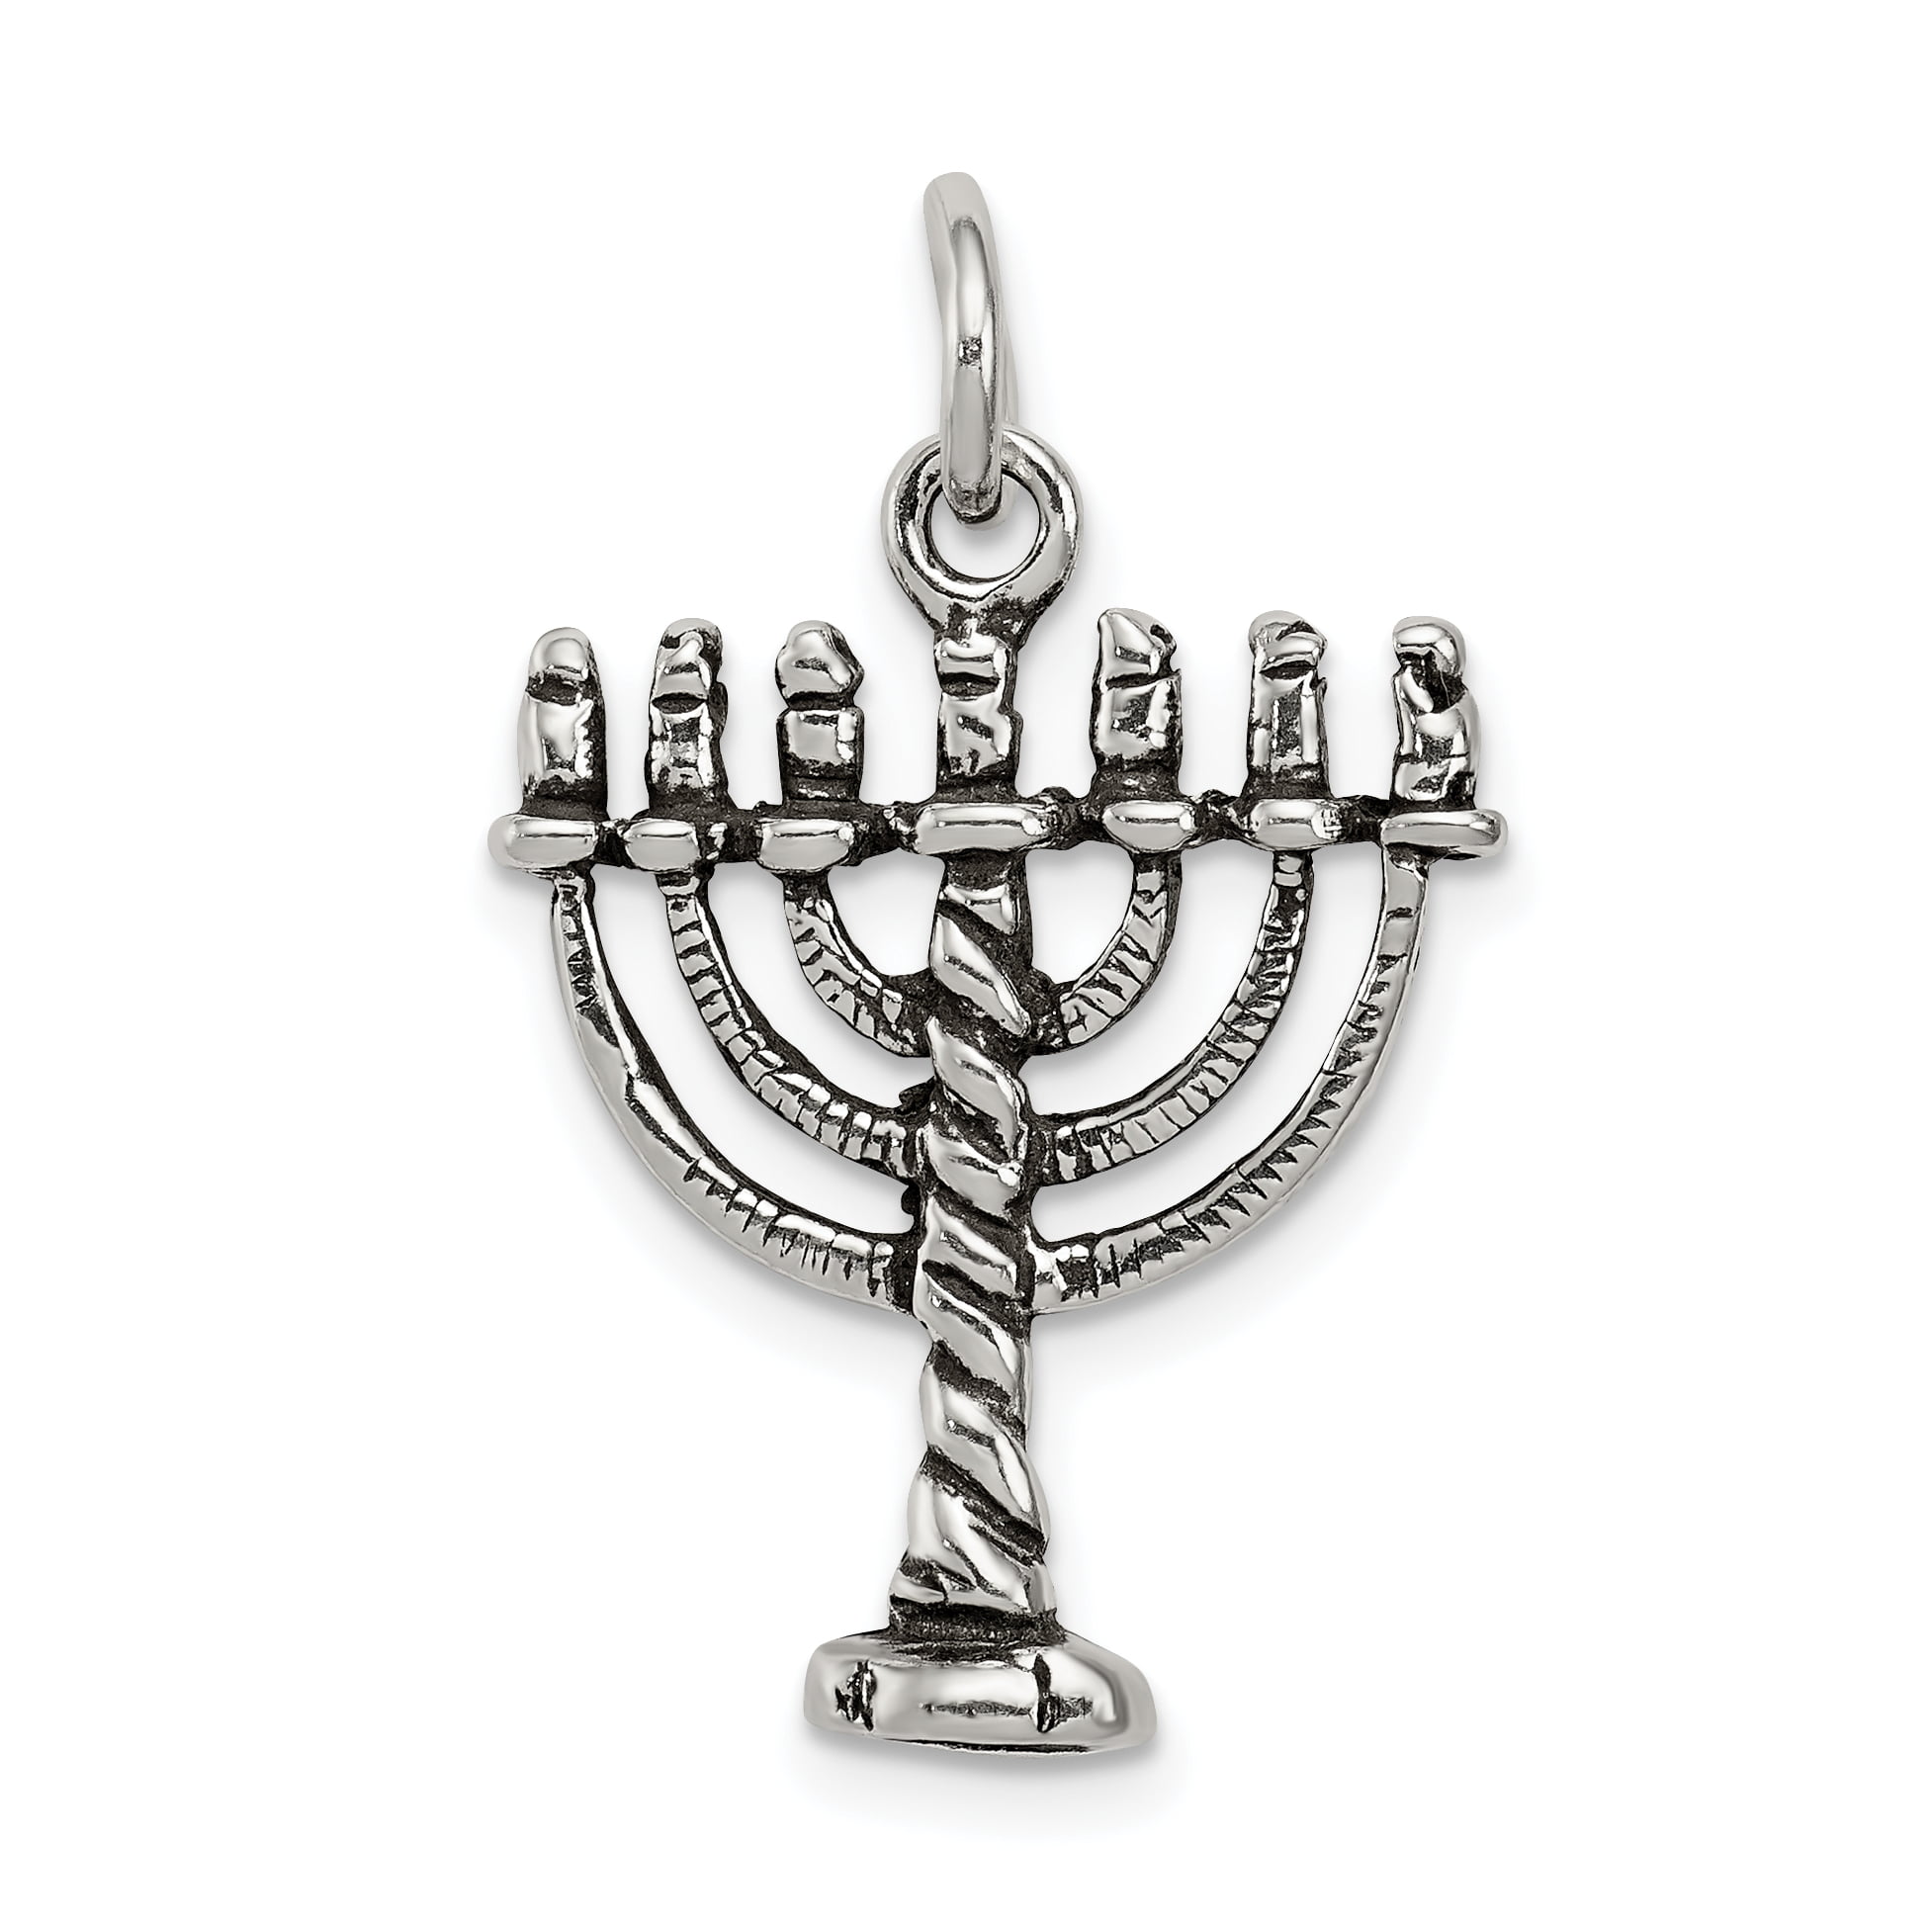 Chanukkiah Menorah Candles Charm Sterling silver Pendant  Chanukah Charm  candles  religious gift  silver gift